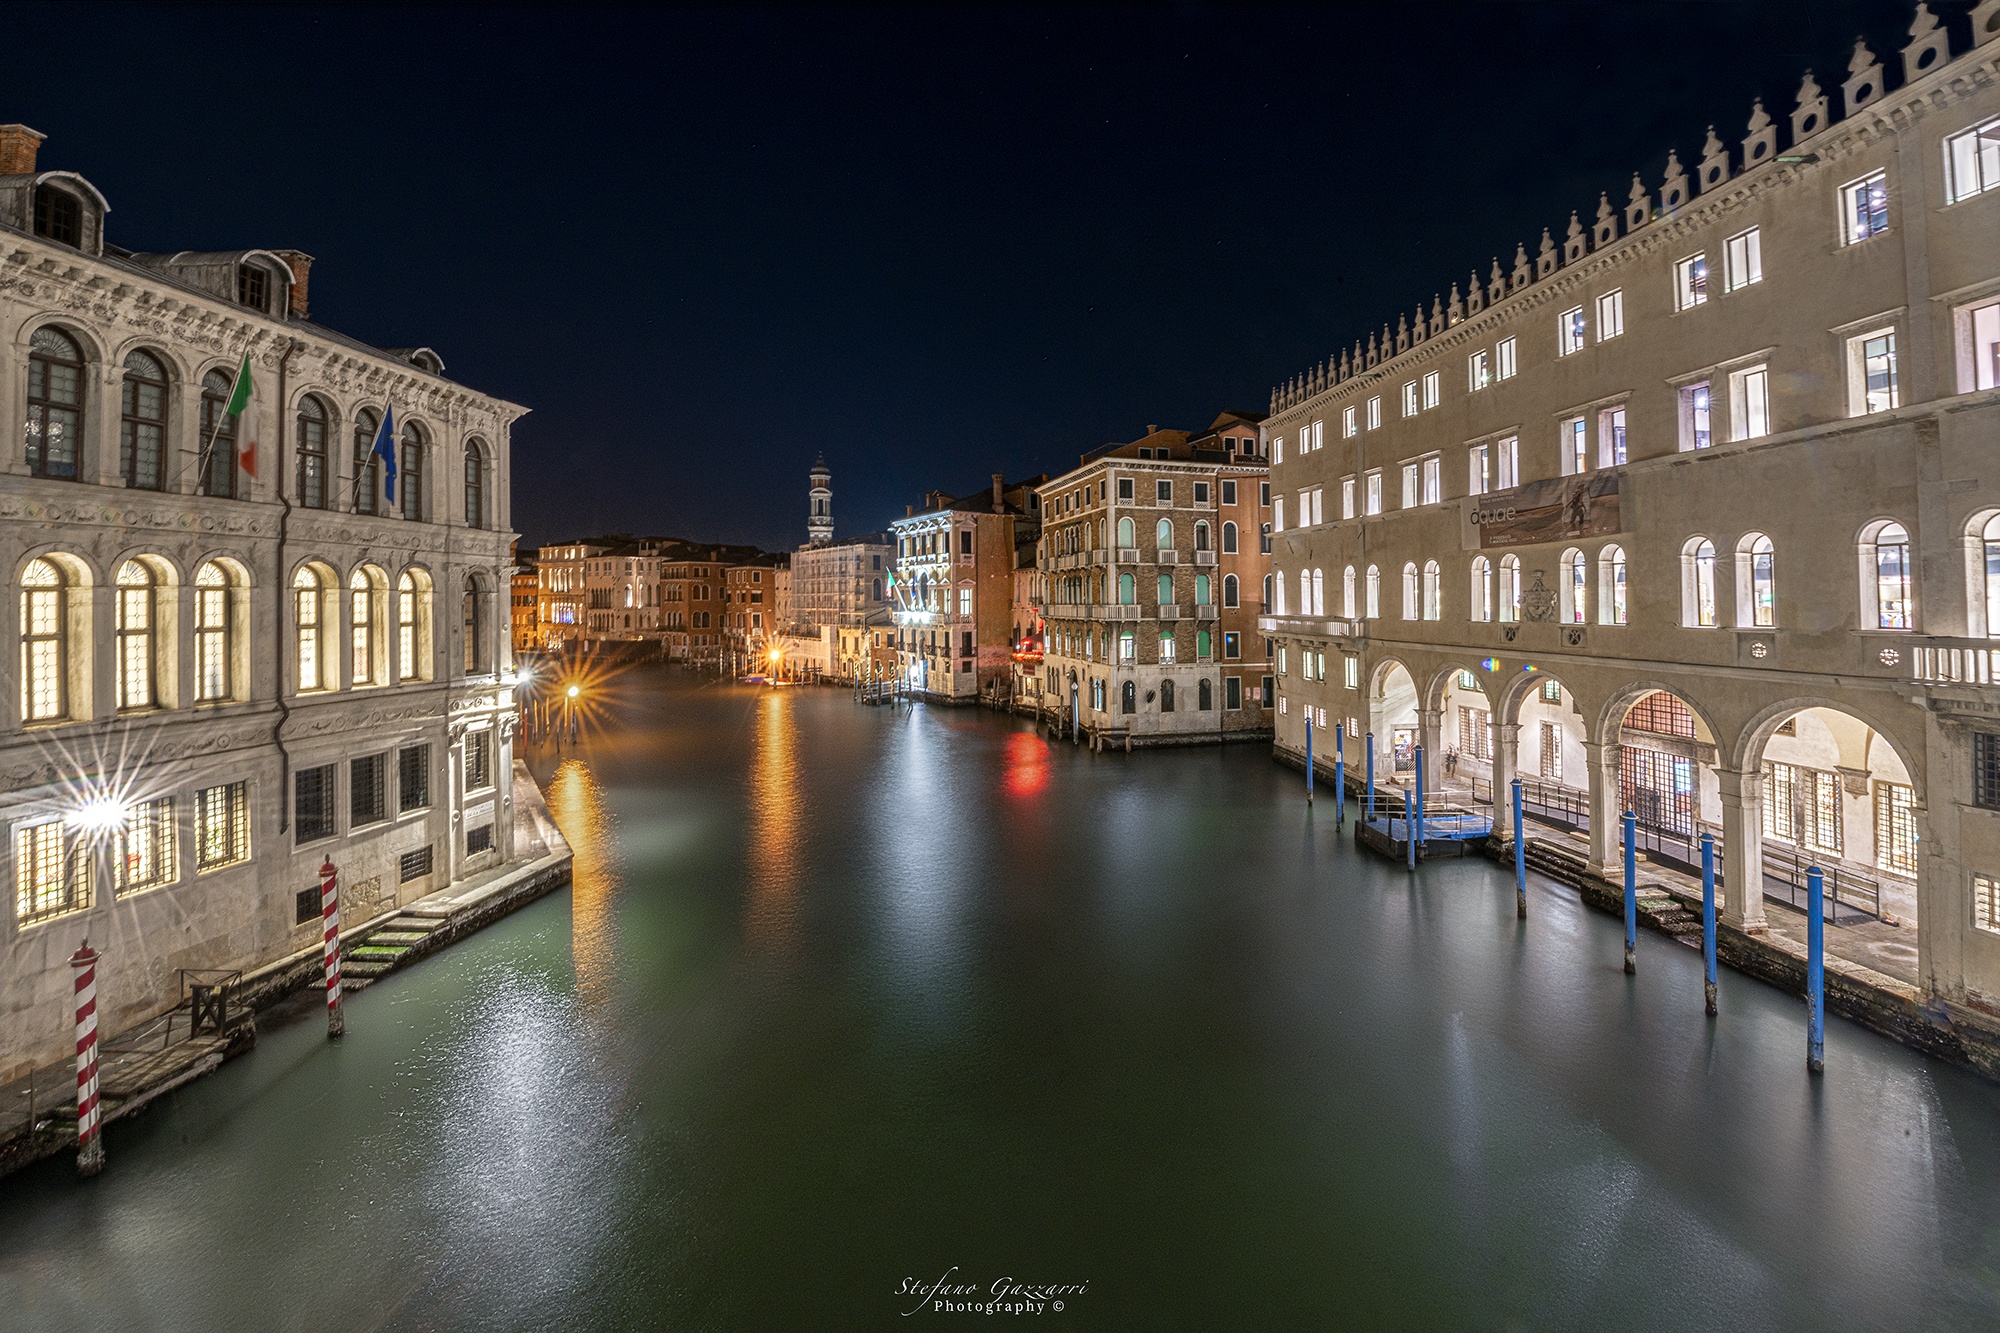 An evening in Venice ...